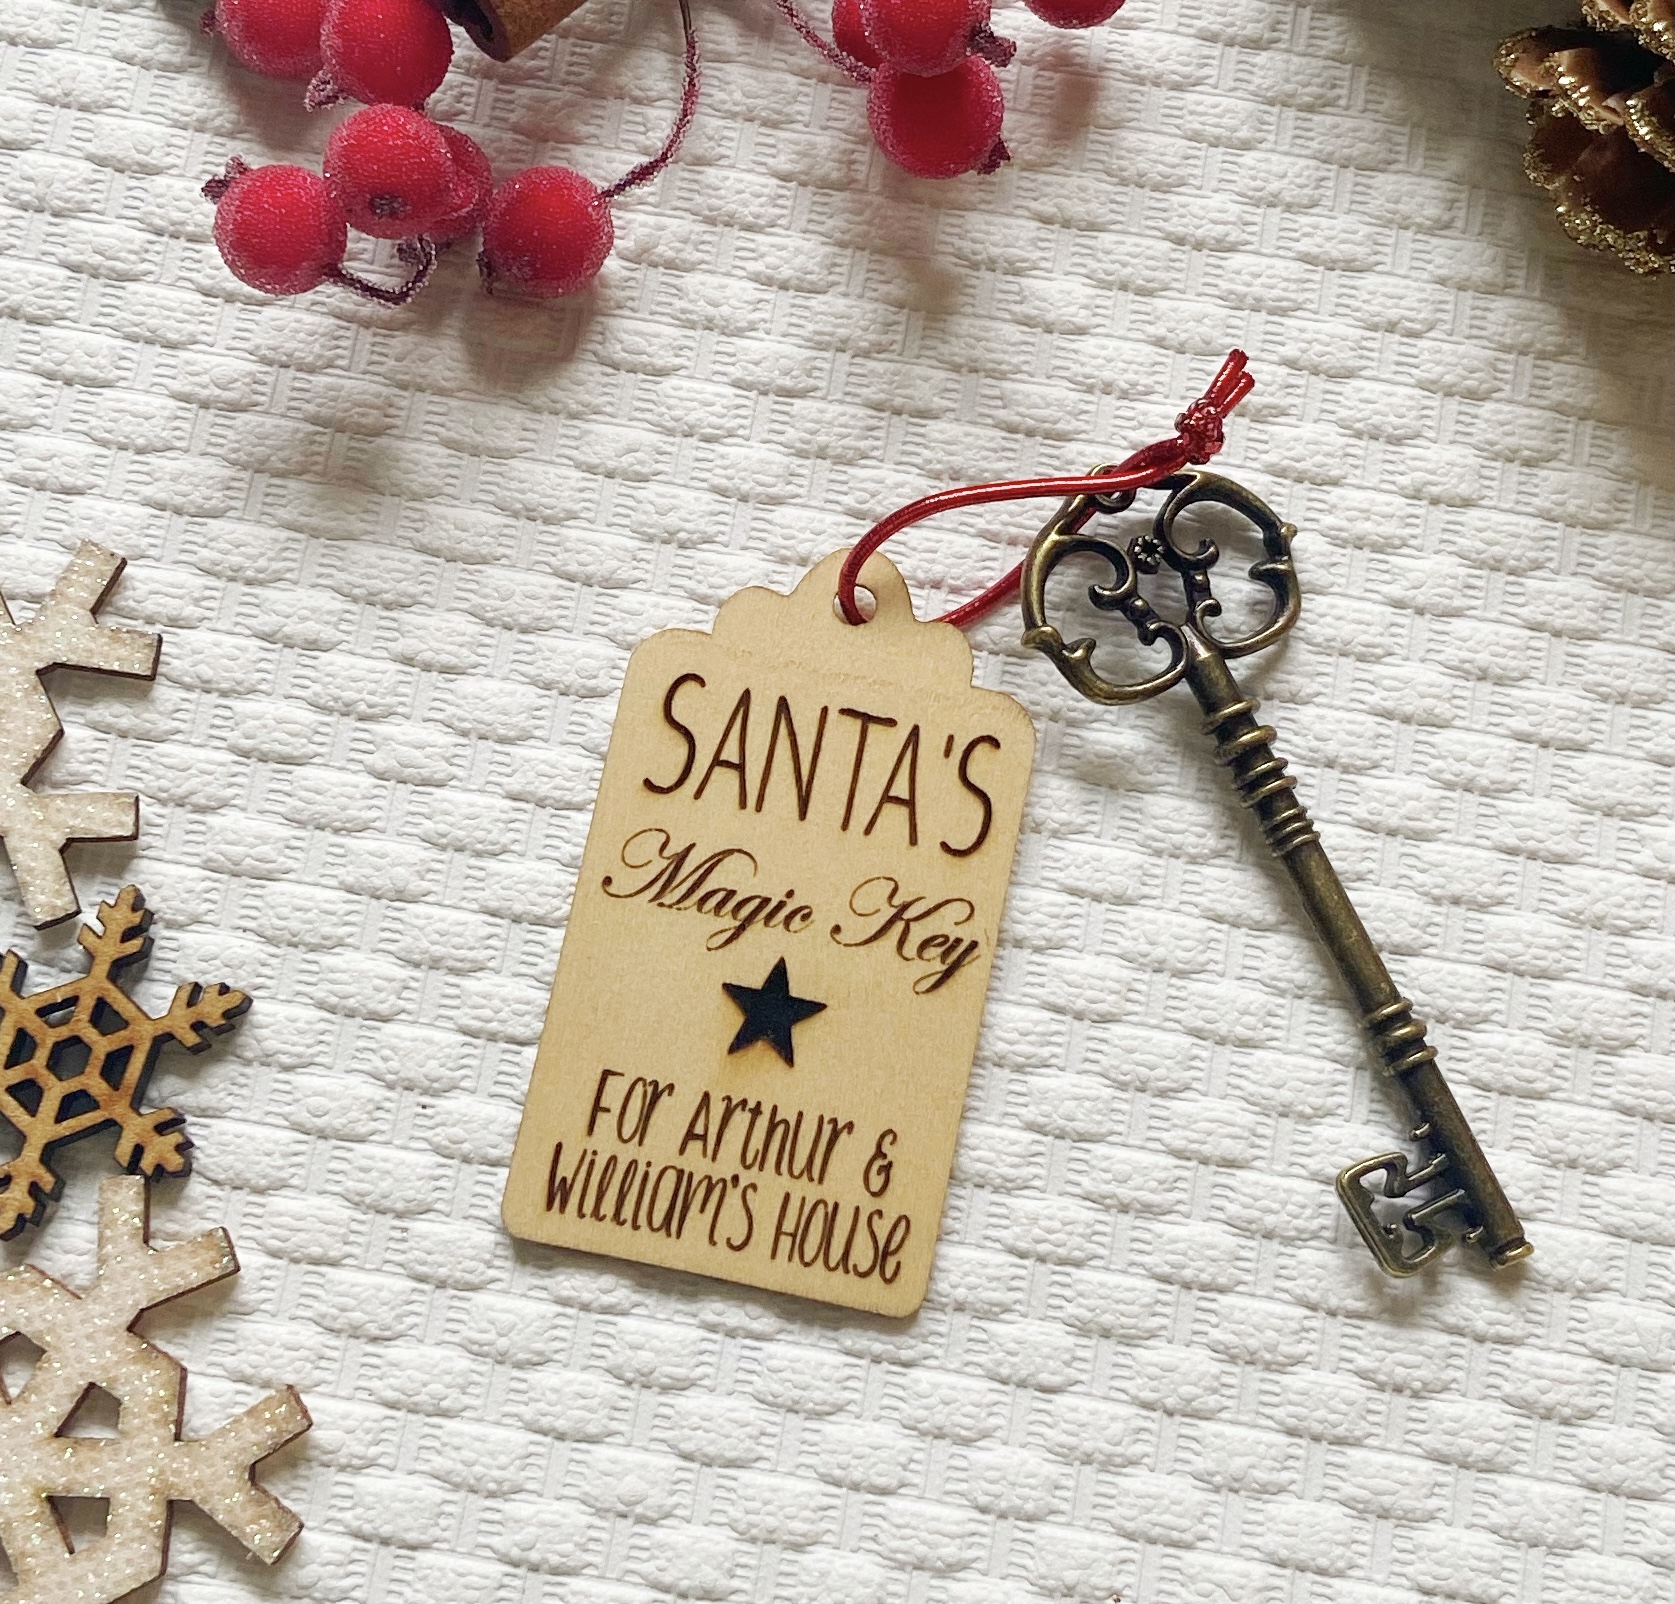 Santa's Magic Key 